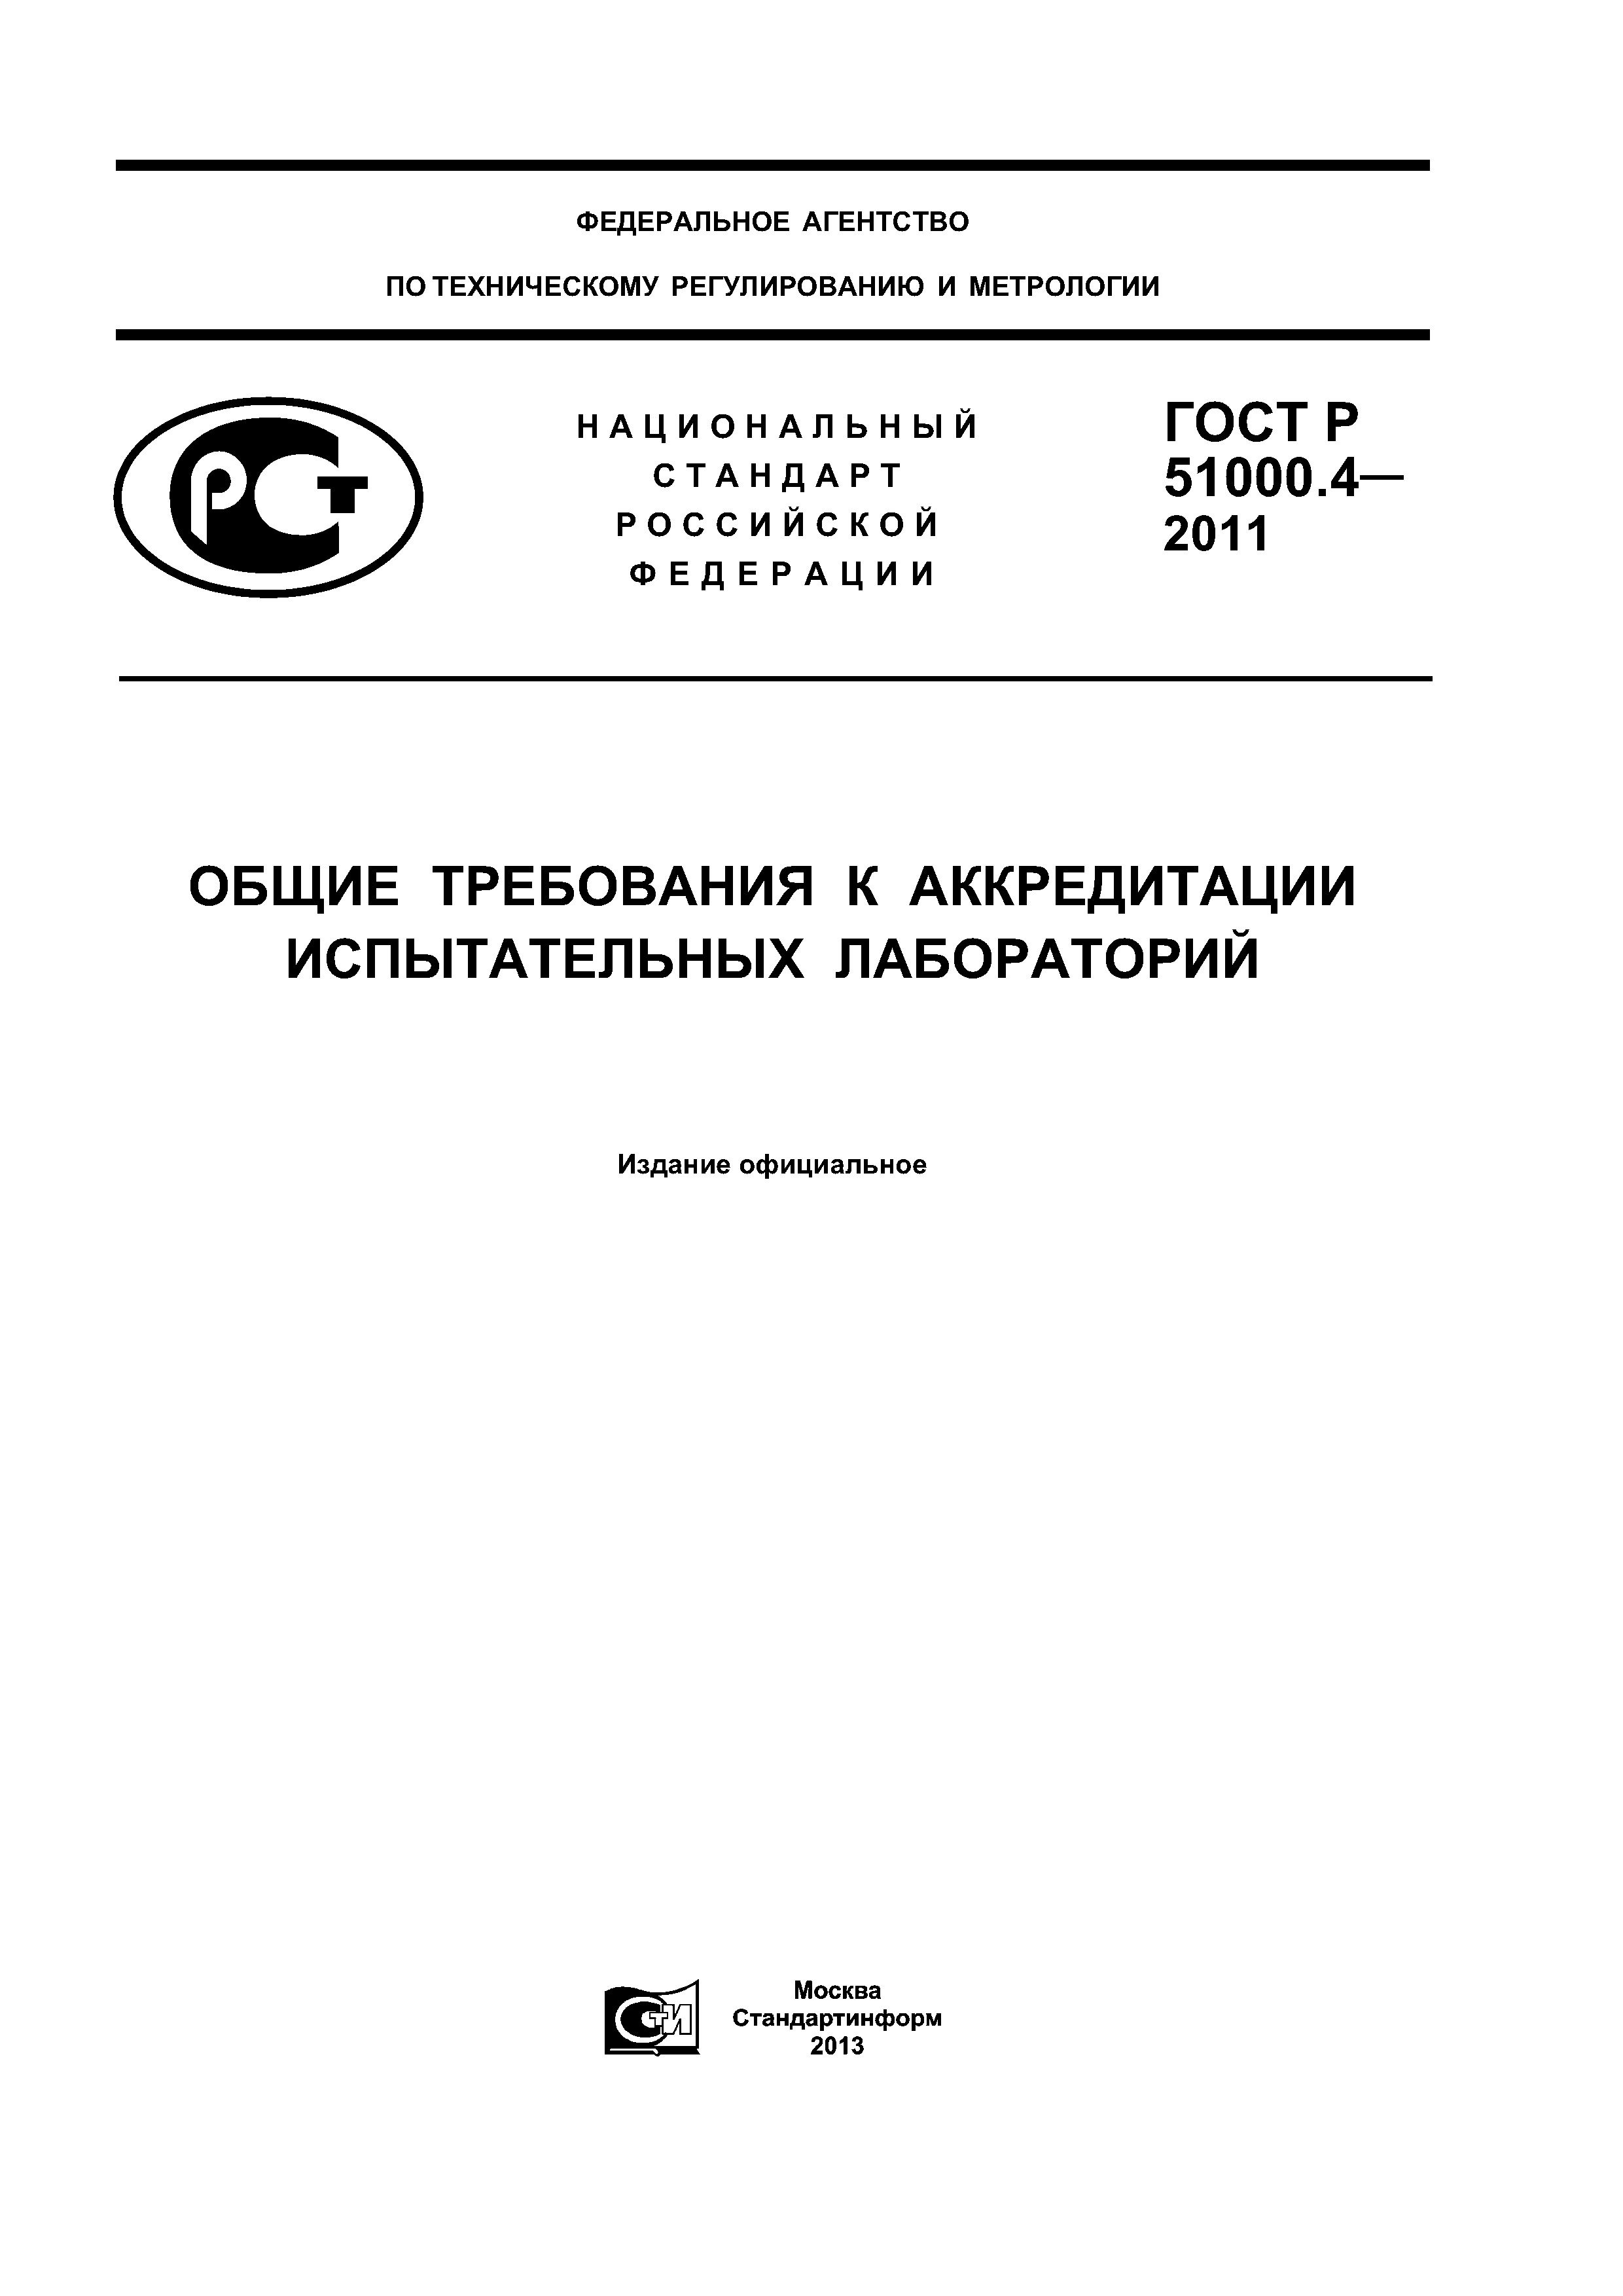 ГОСТ Р 51000.4-2011